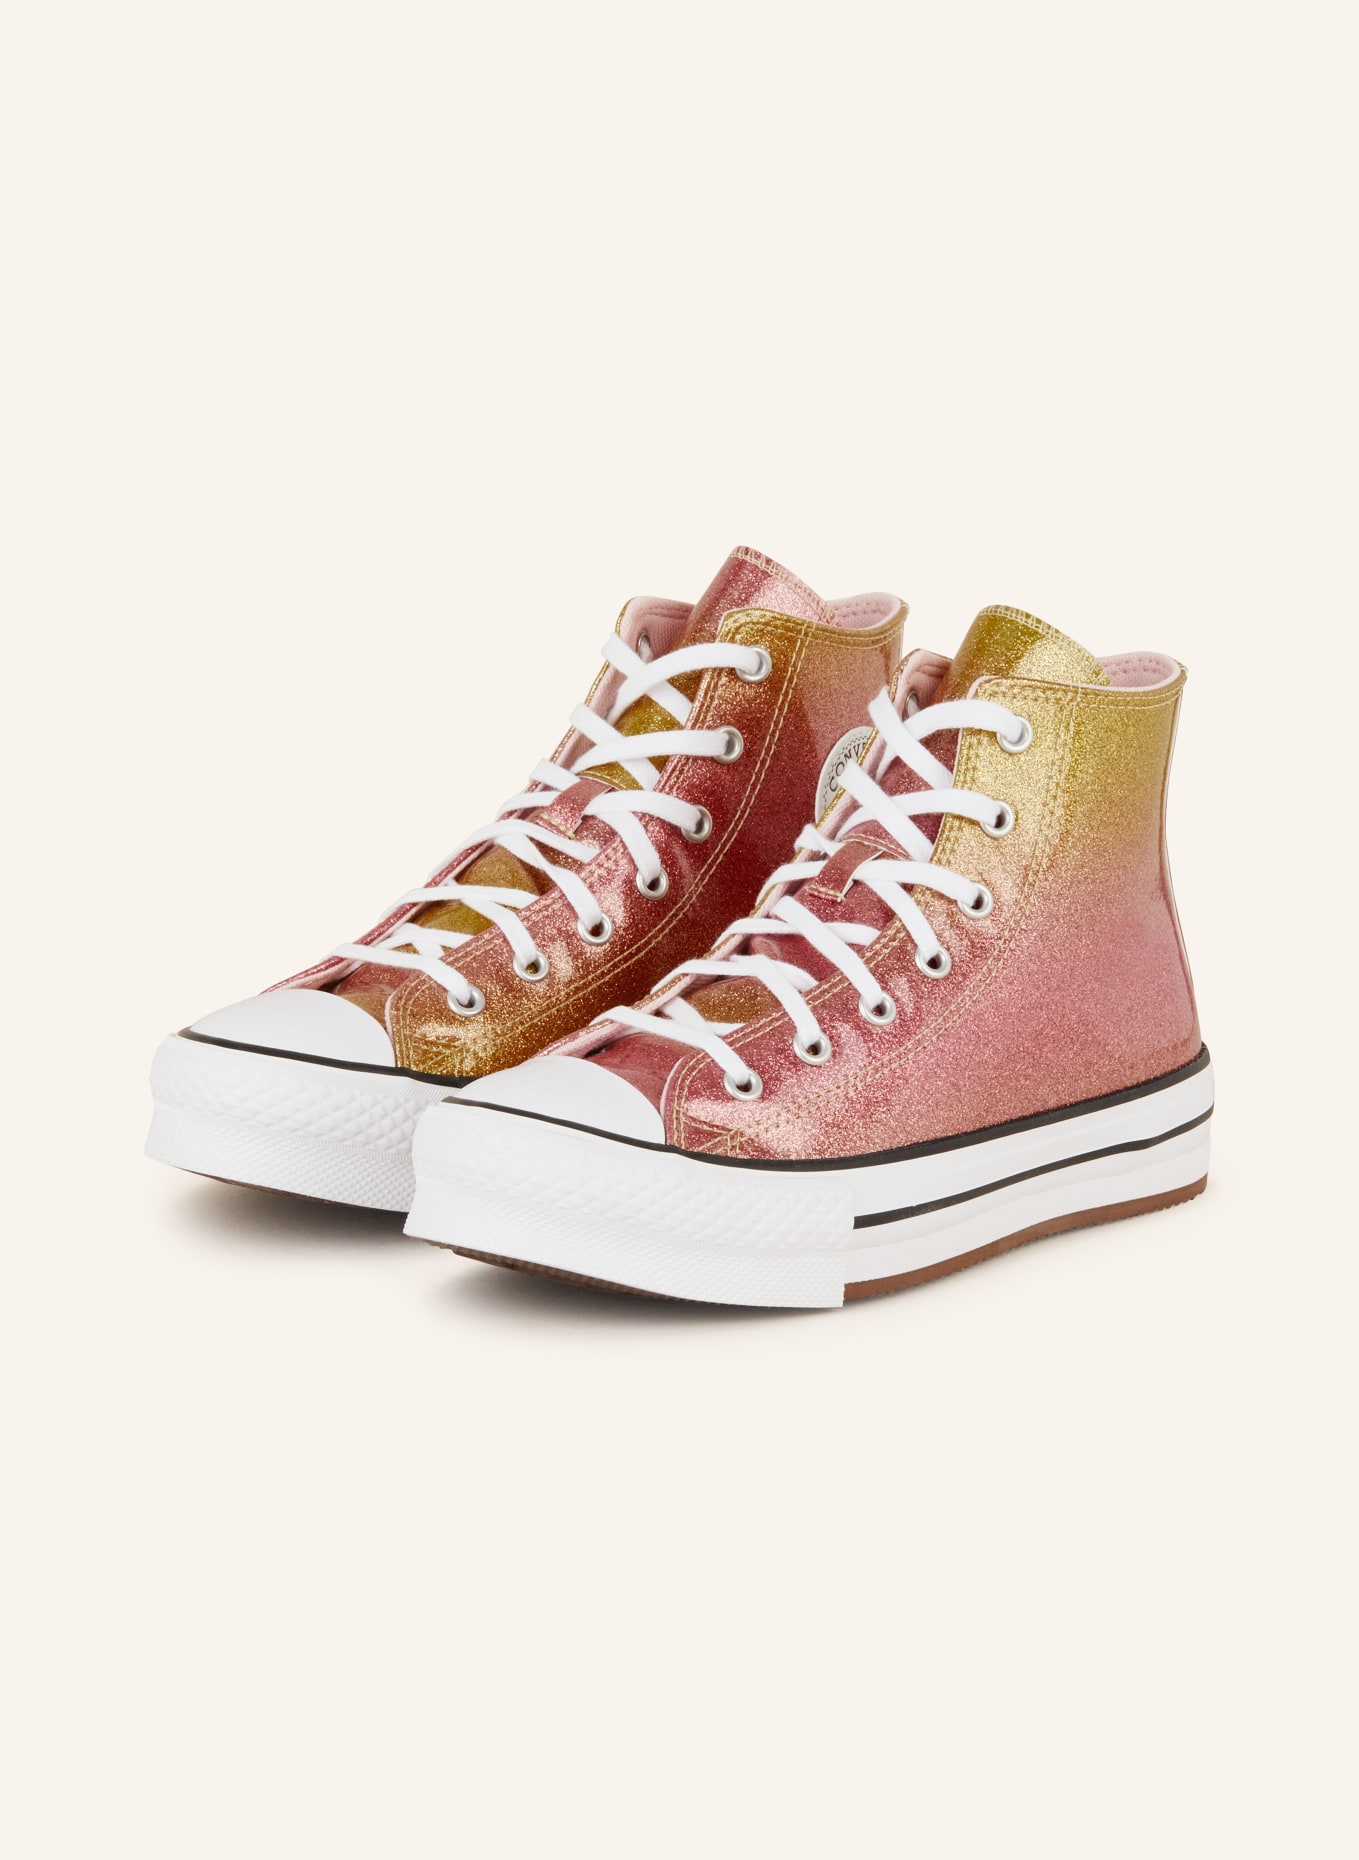 CONVERSE Hightop-Sneaker CHUCK TAYLOR ALL STAR, Farbe: PINK/ GOLD (Bild 1)